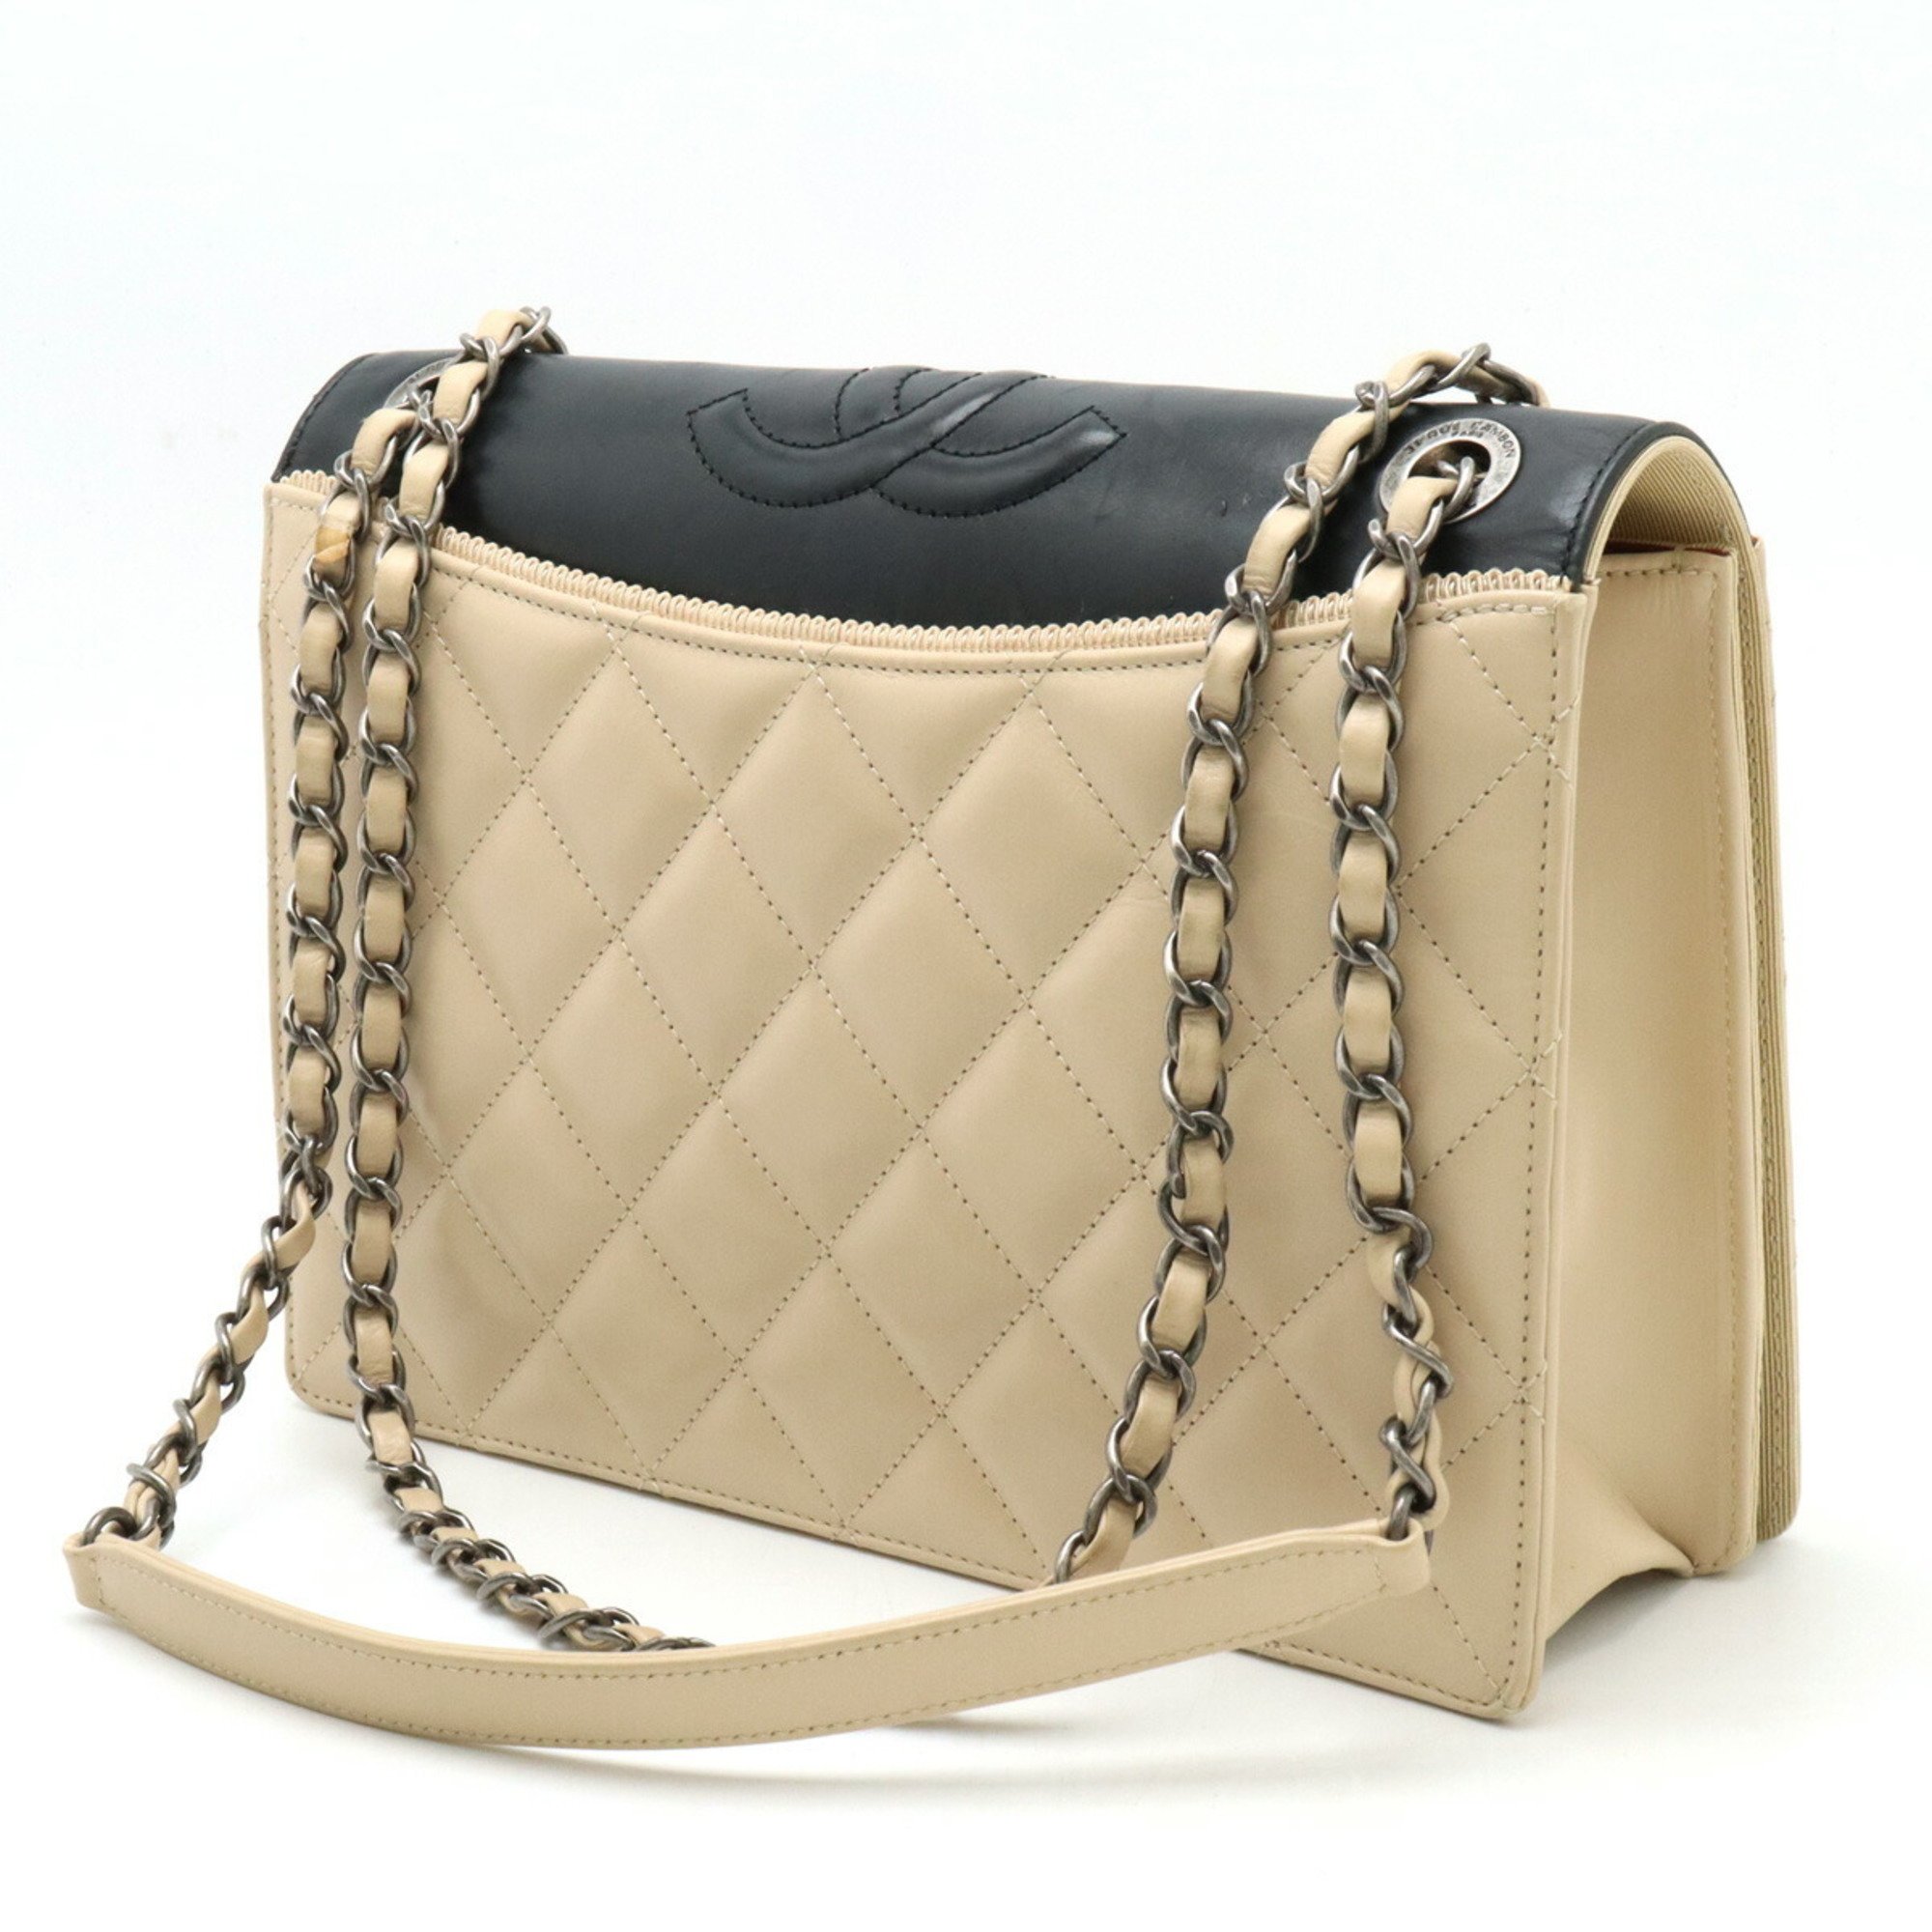 CHANEL Chanel Matelasse Coco Mark Chain Bag Shoulder Leather Bicolor Beige Black